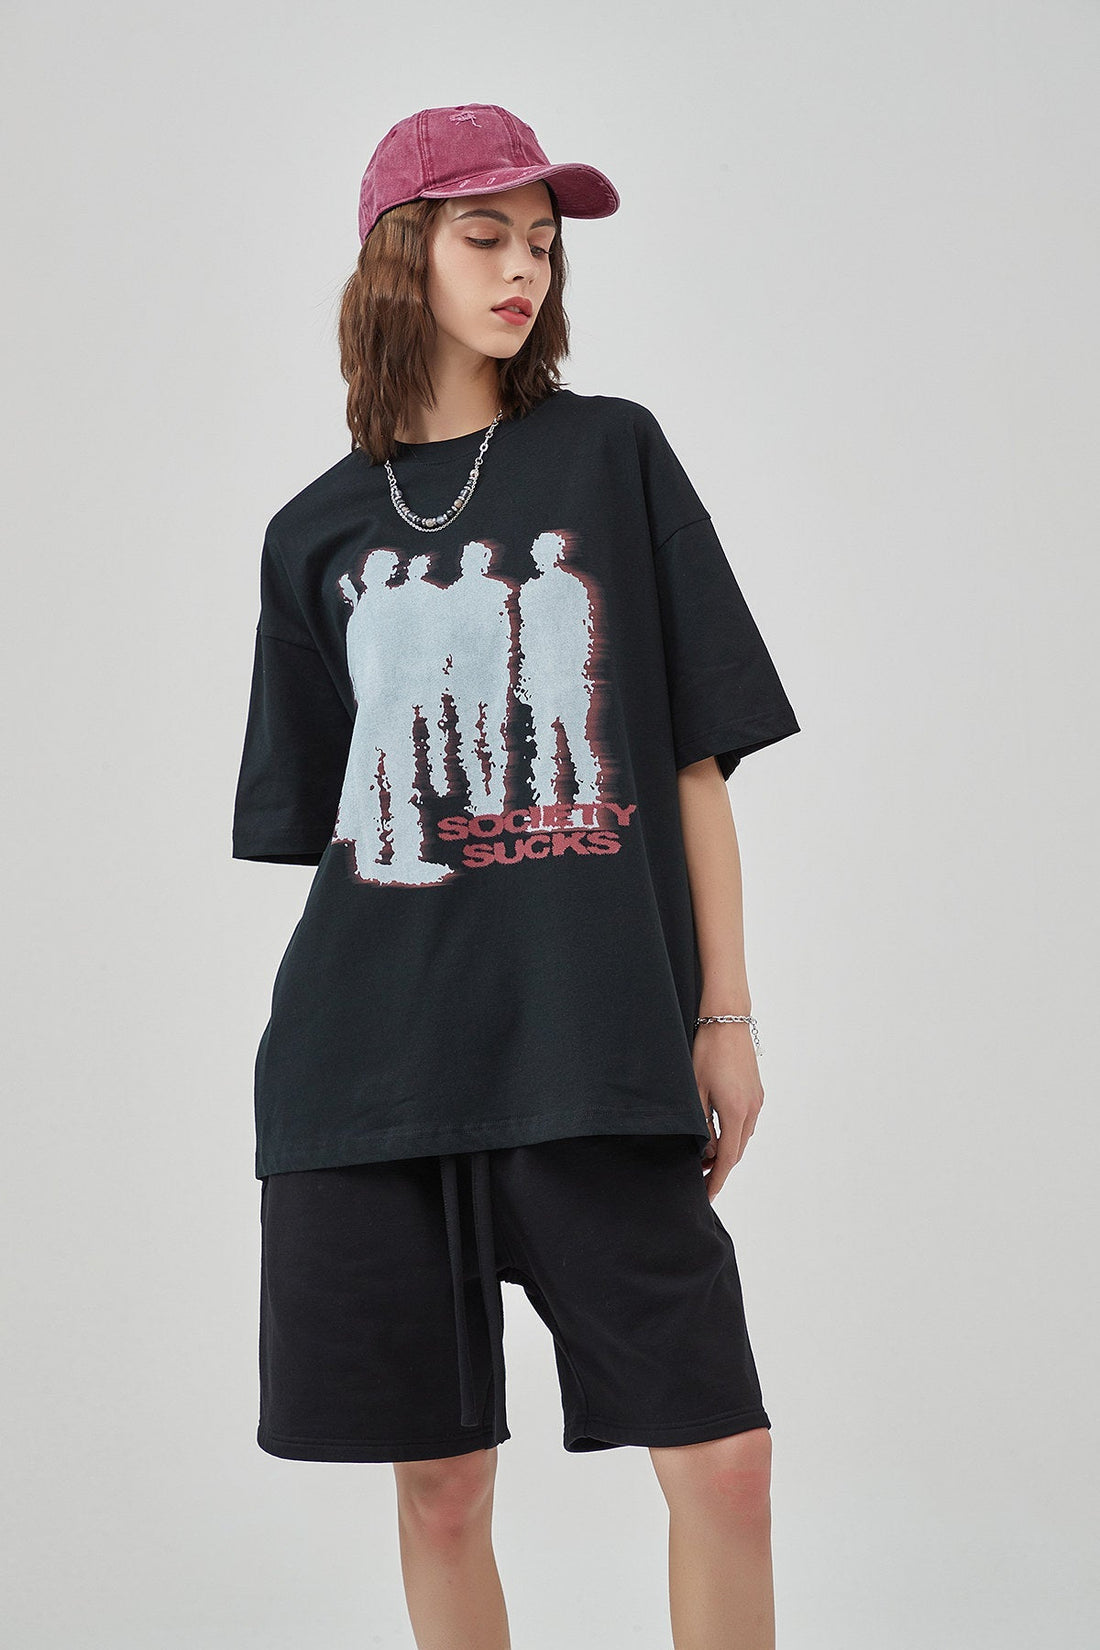 Silhouette Vintage Print Women T-Shirt